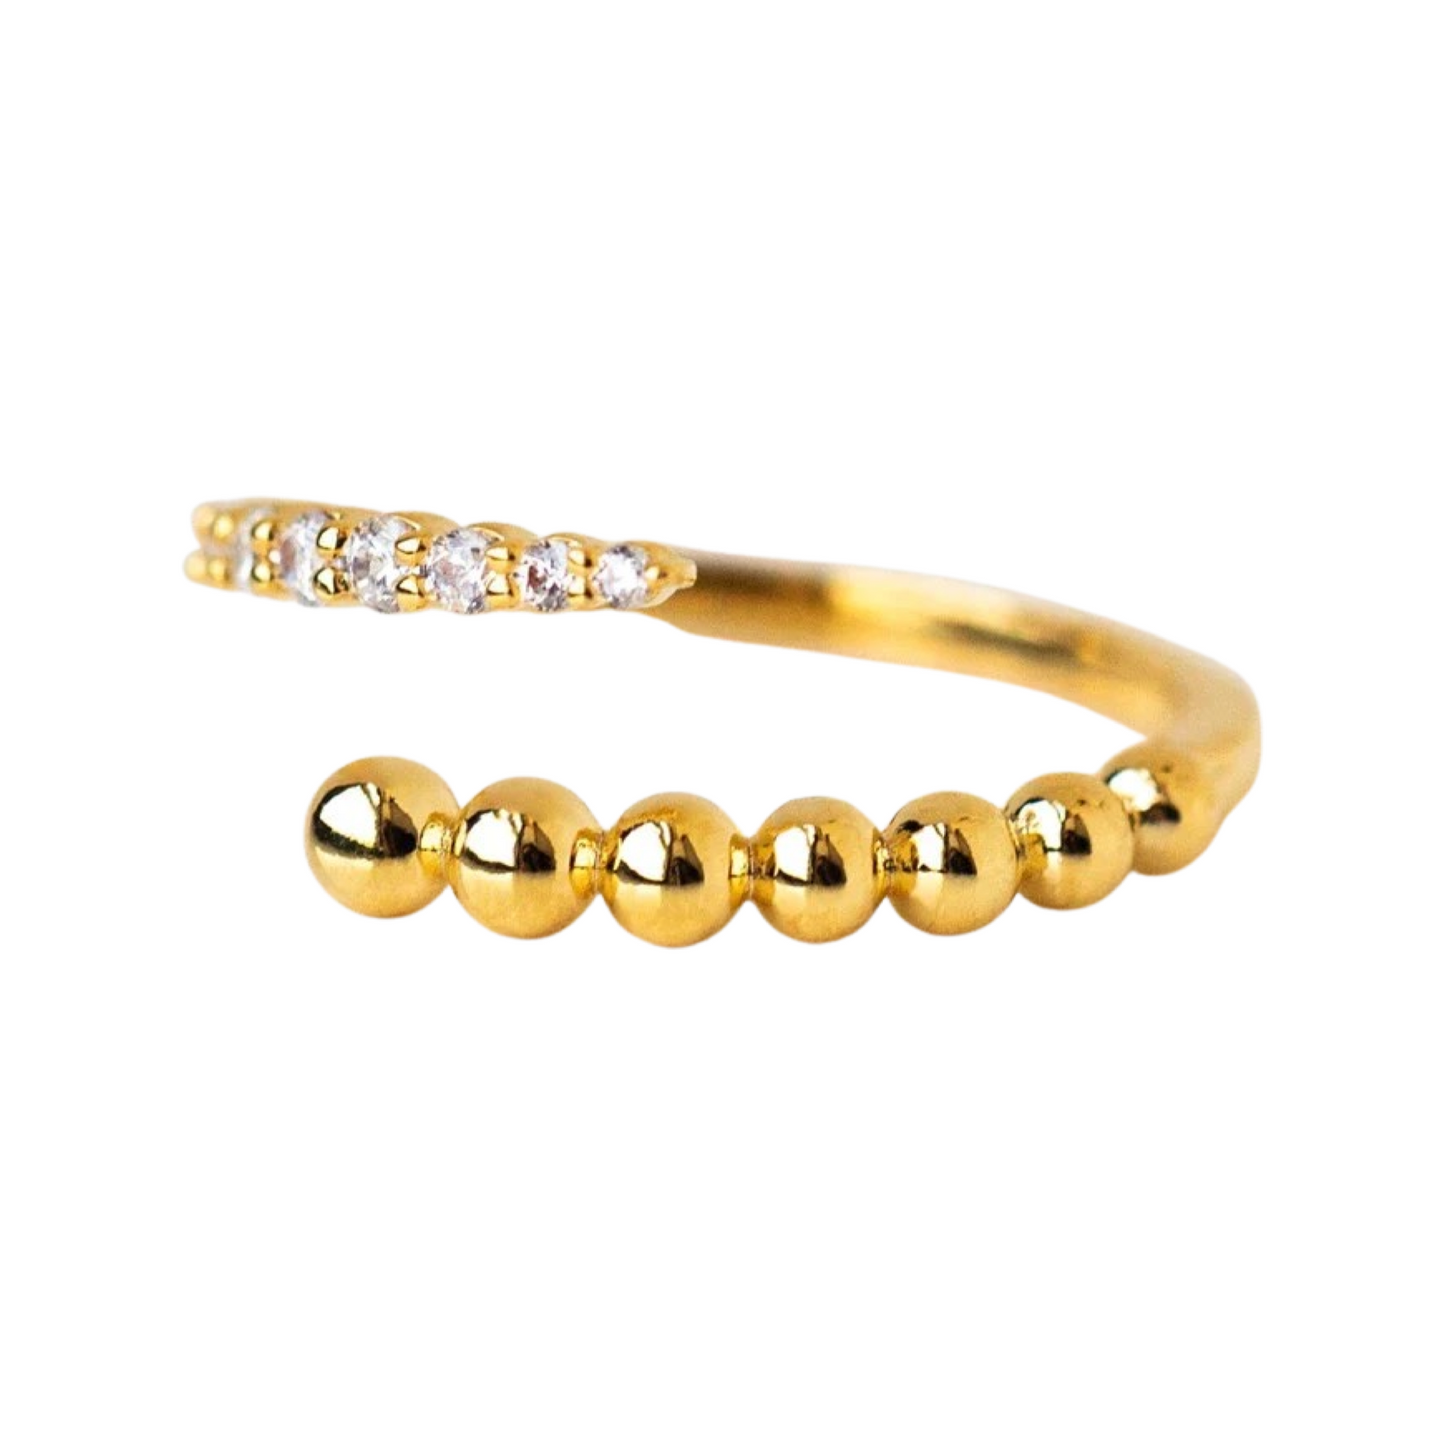 Nikos Ring Yasemen Store Schmuck Accessoires 925 Sterling Silber Sterlingsilber Sterling Silver 18K Vergoldet Gold jewel jewelry ring